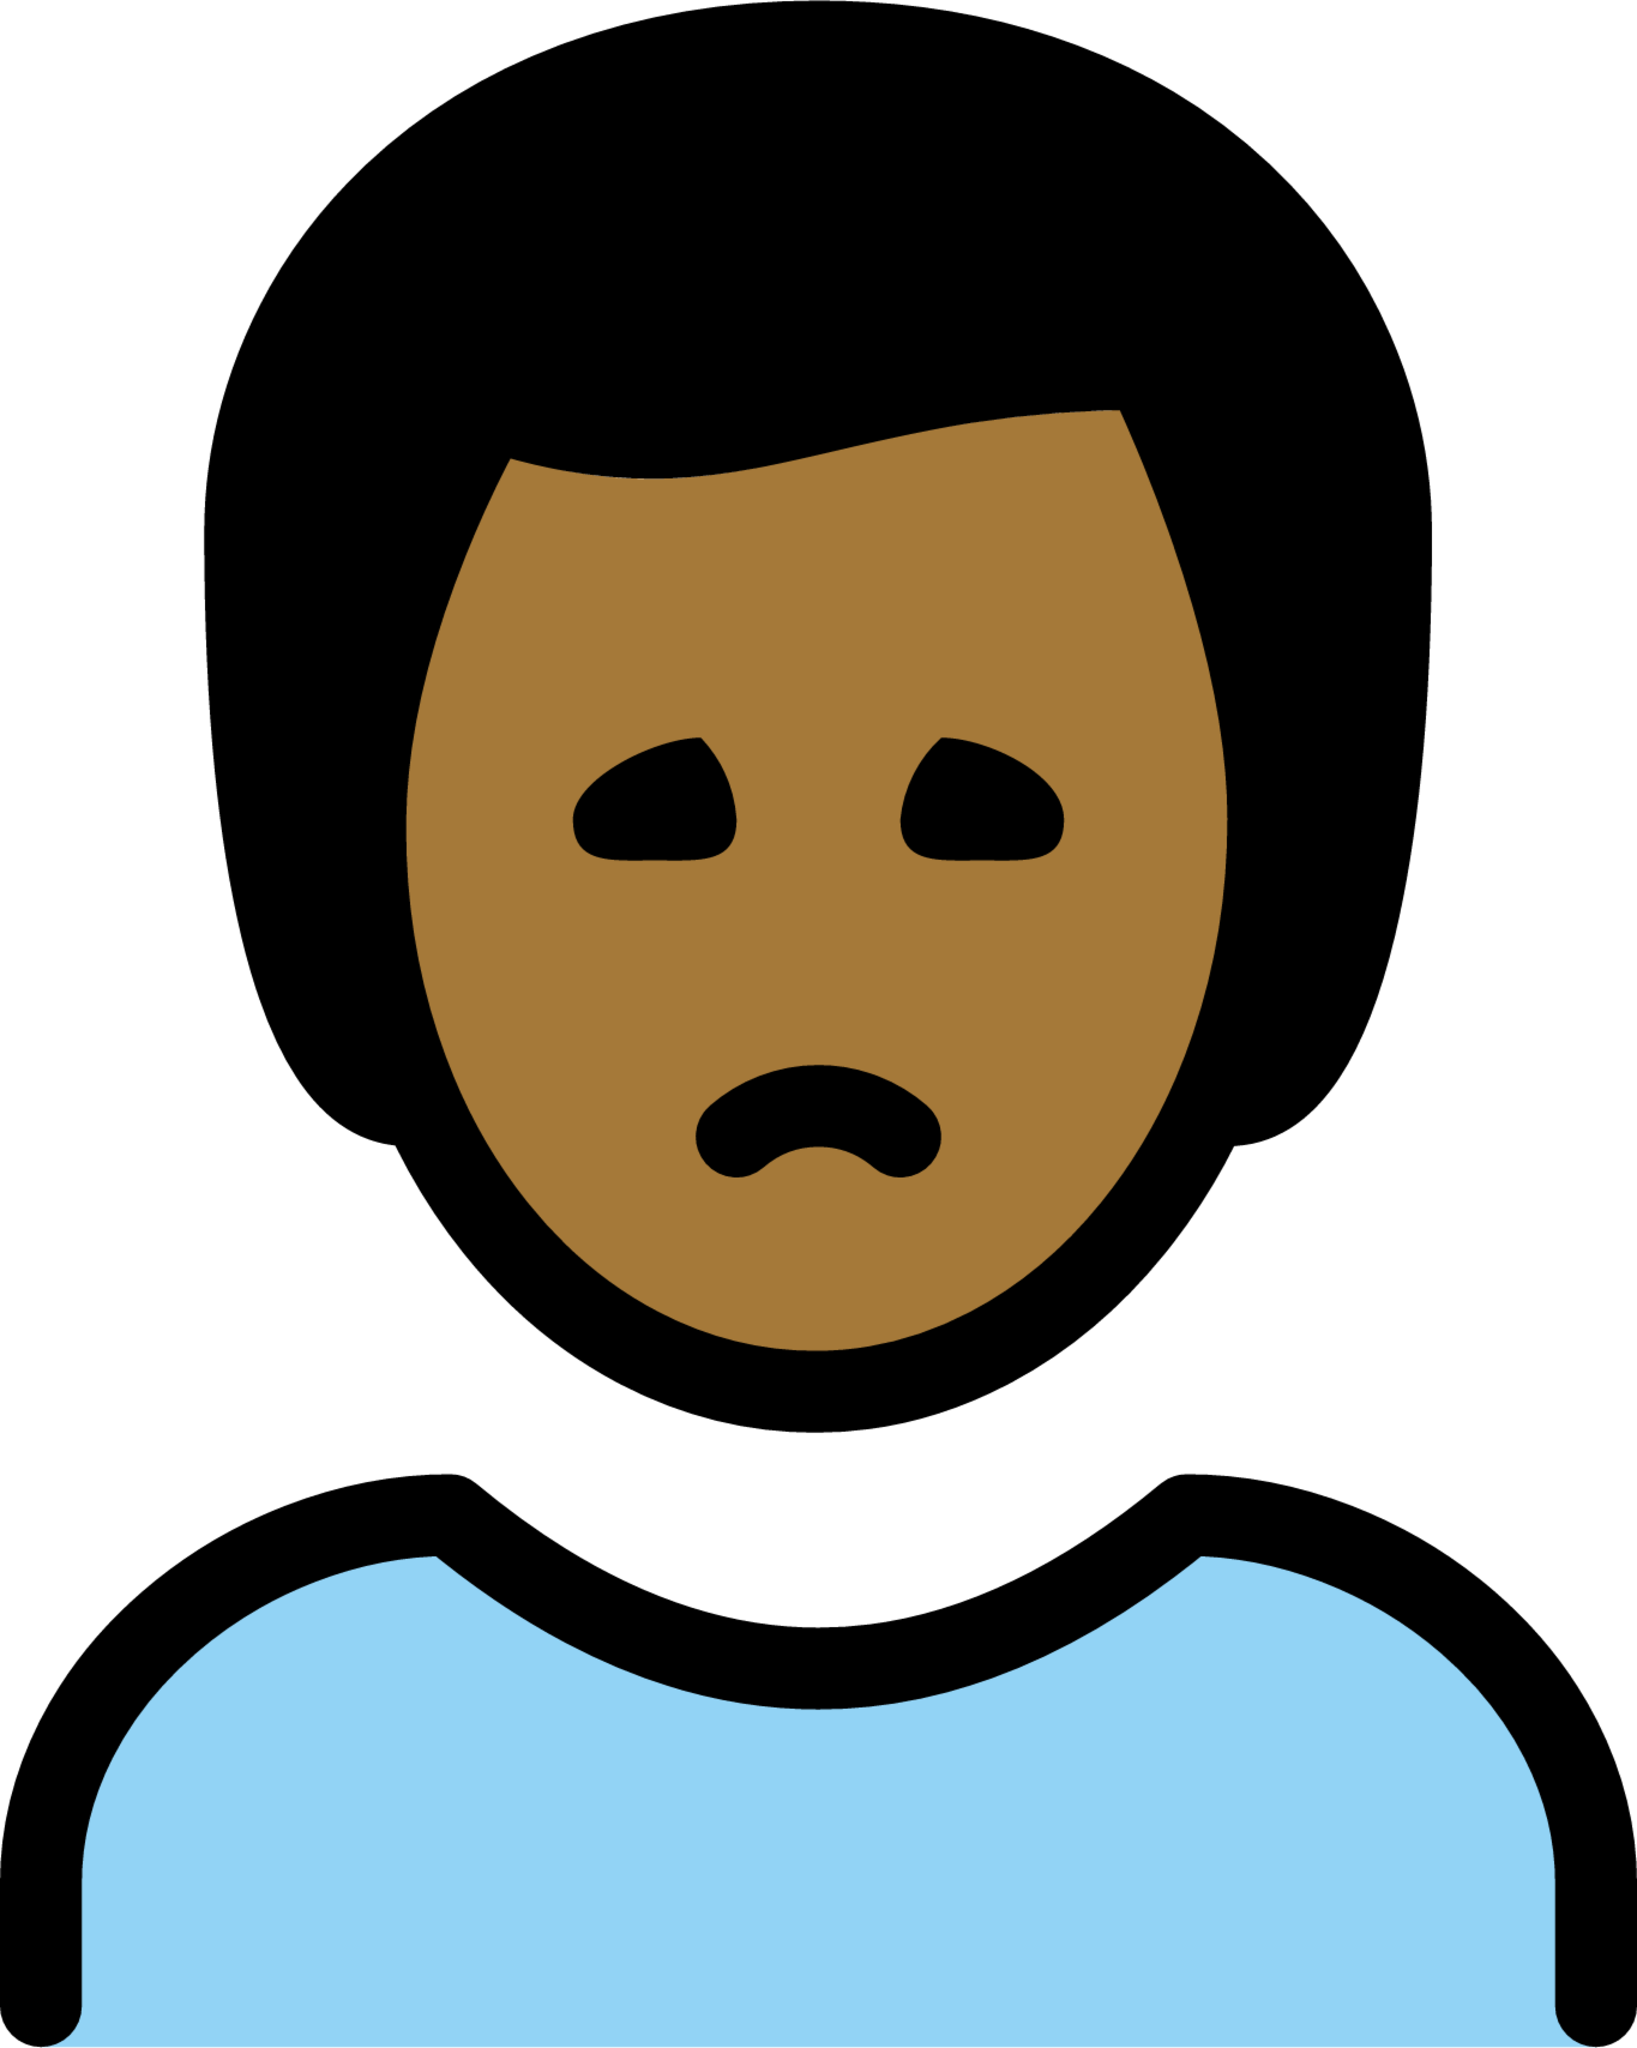 man frowning: medium-dark skin tone emoji